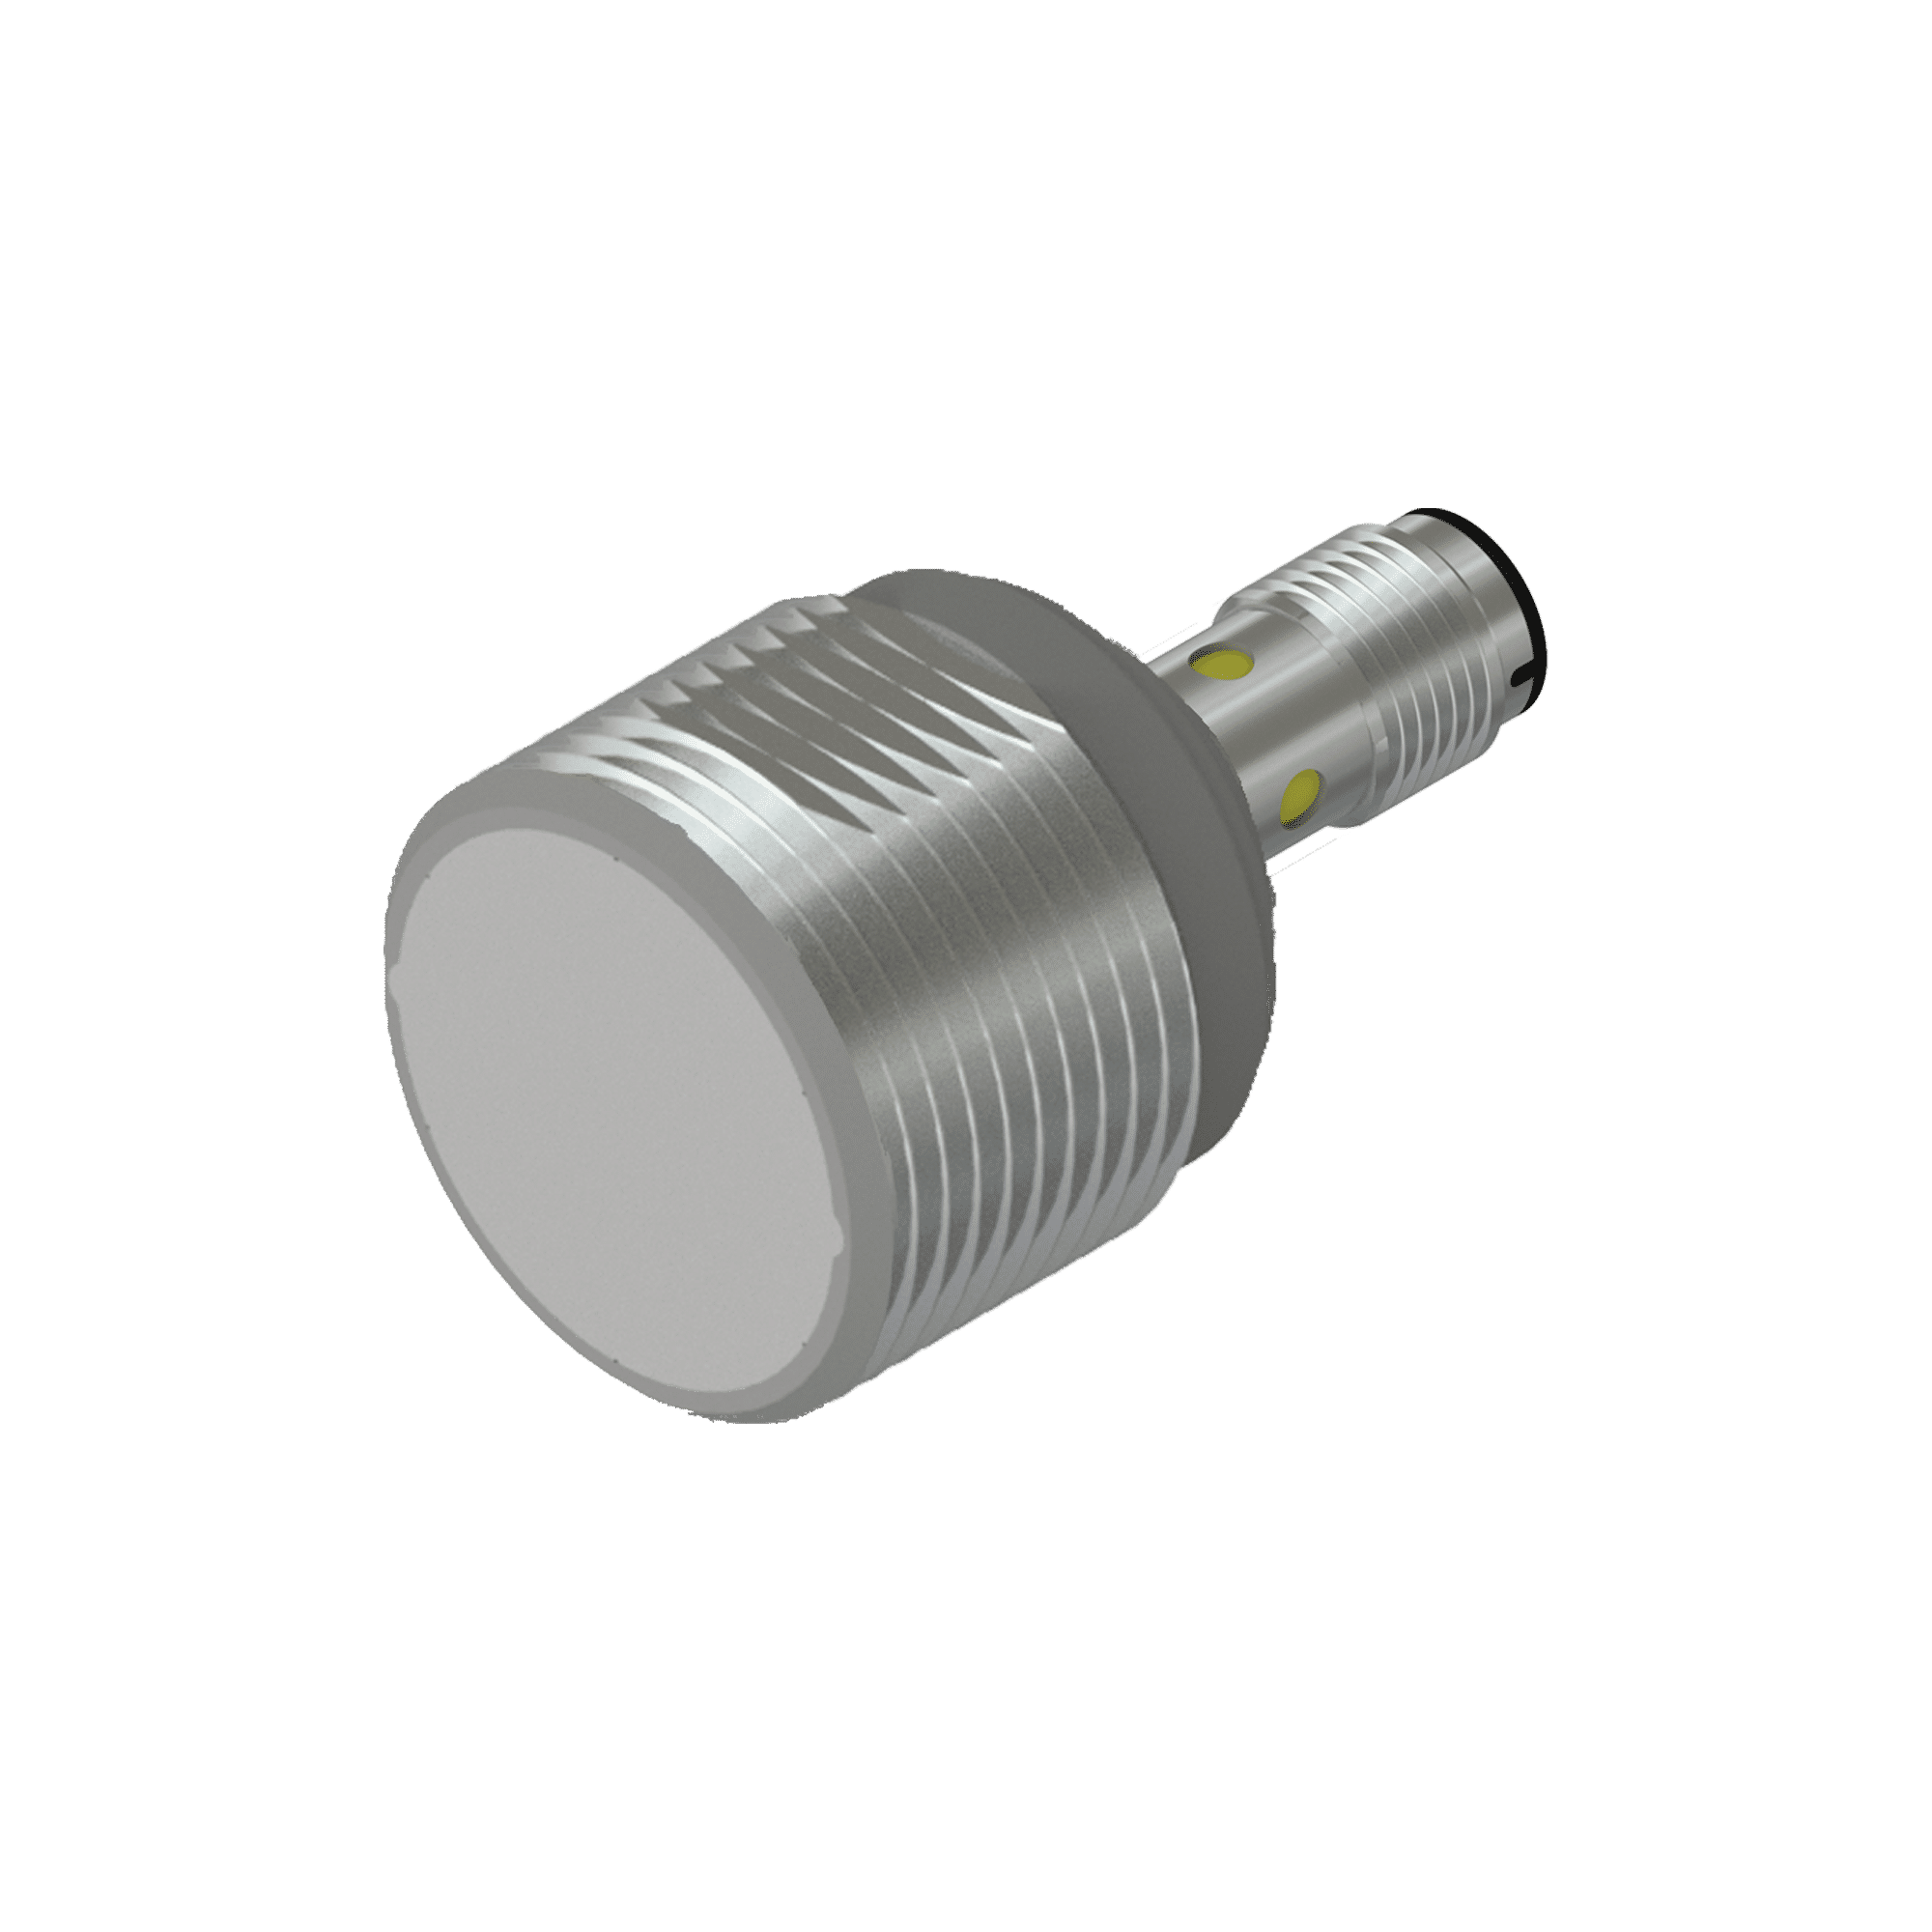 Inductive round sensor M30 Length 30mm  Flush Sensing distance 15mm  PNP NO output M12 male connector connection